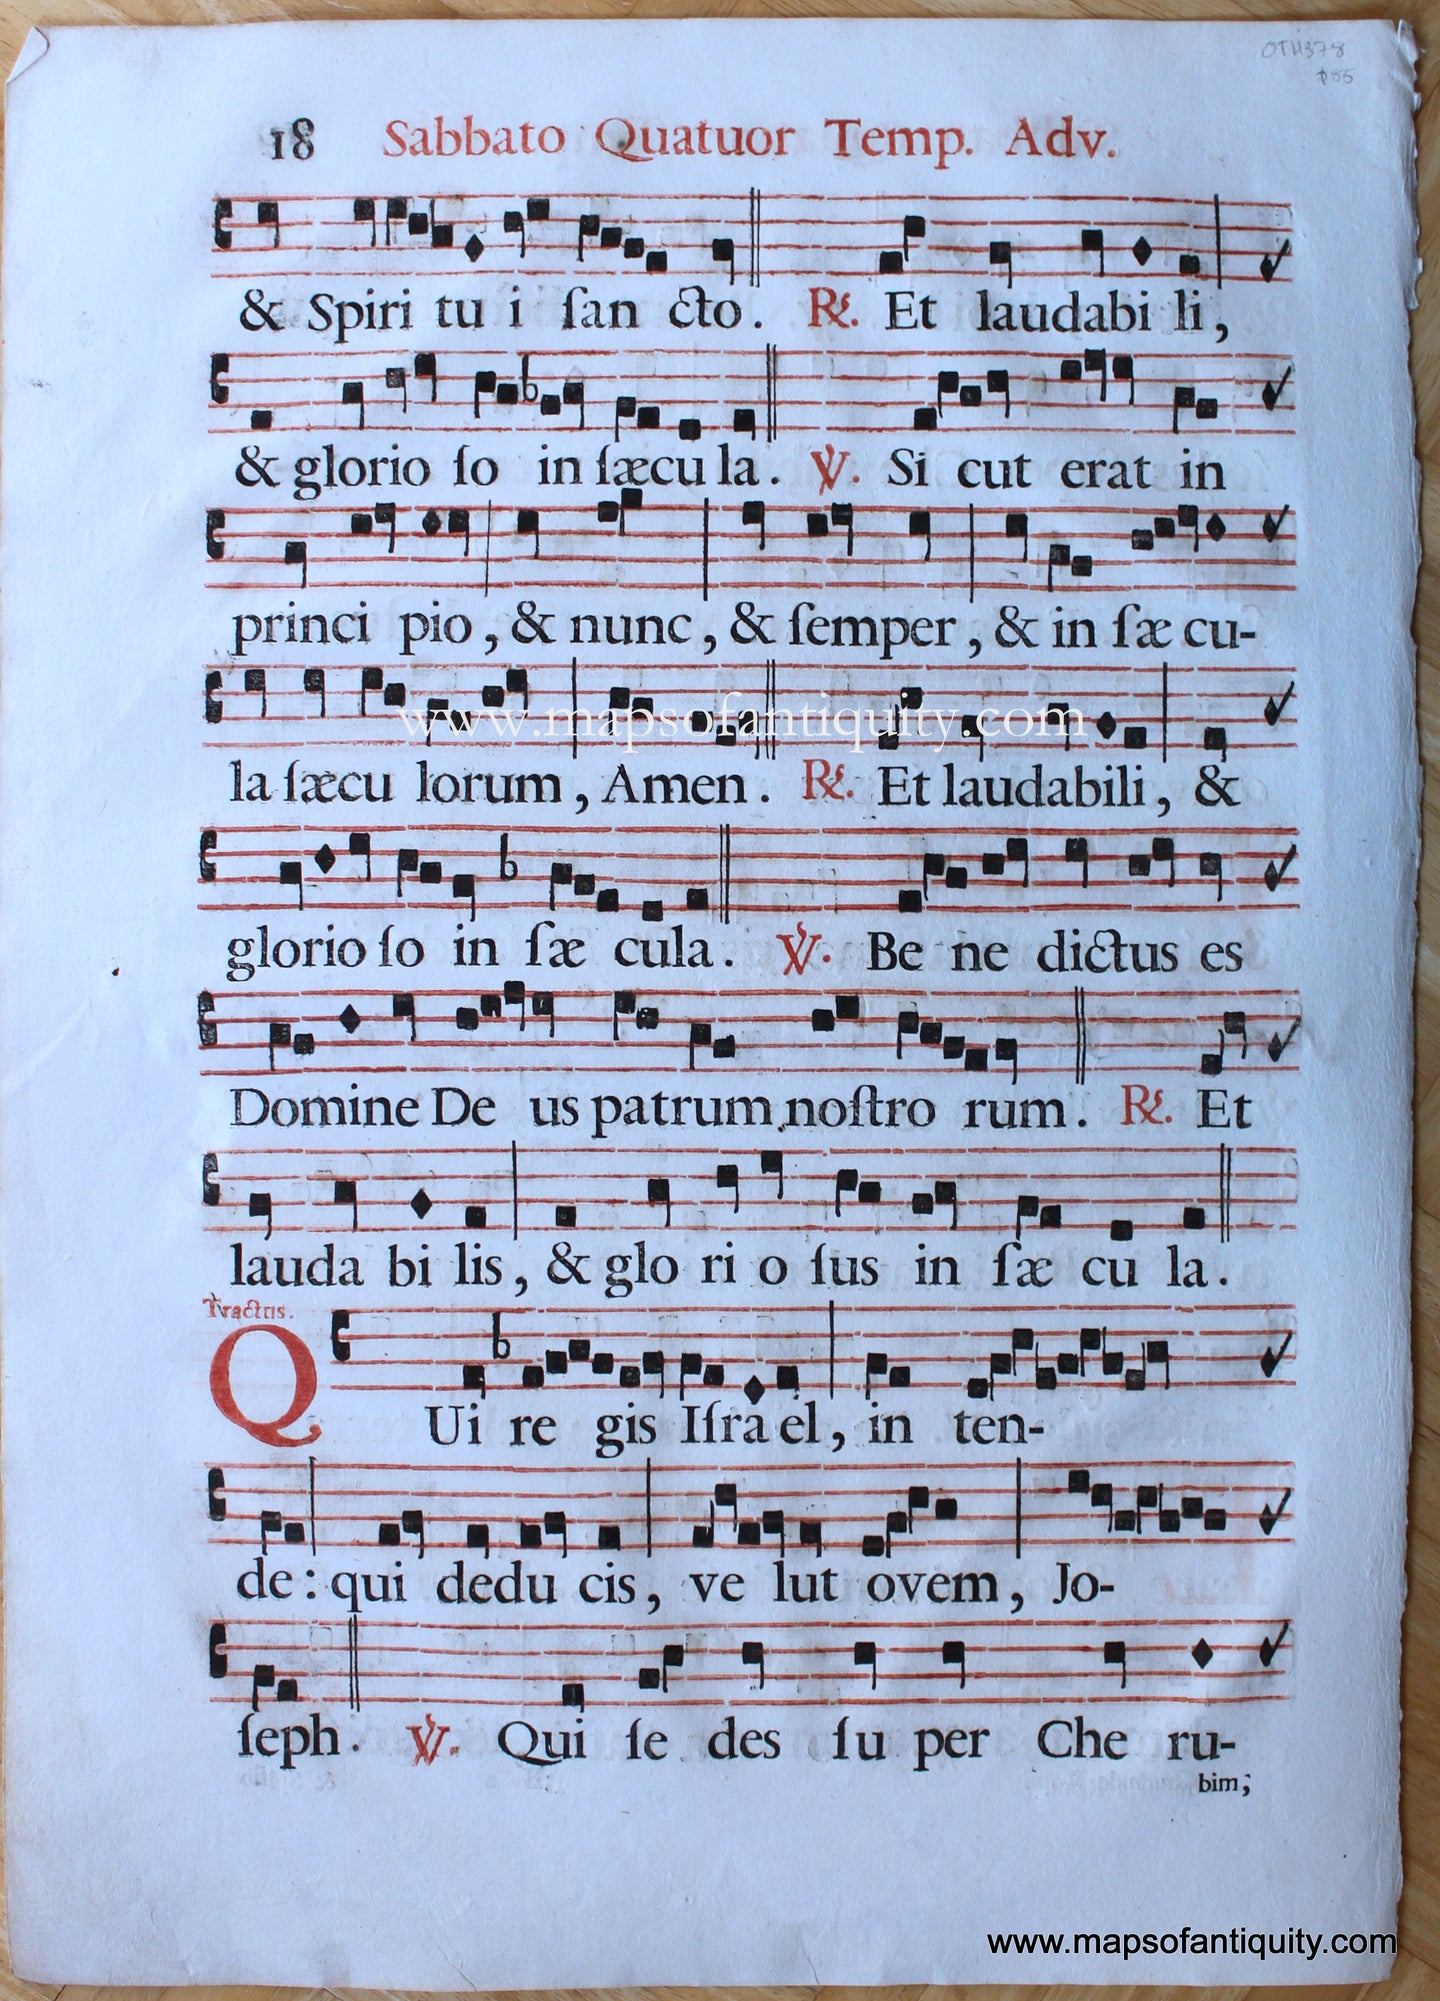 Genuine-Antique-Sheet-Music-on-Paper-Antique-Sheet-Music---Sabbato-Quatuor-Temp.-Adv.-17-c.-16th-century-Unknown-Maps-Of-Antiquity